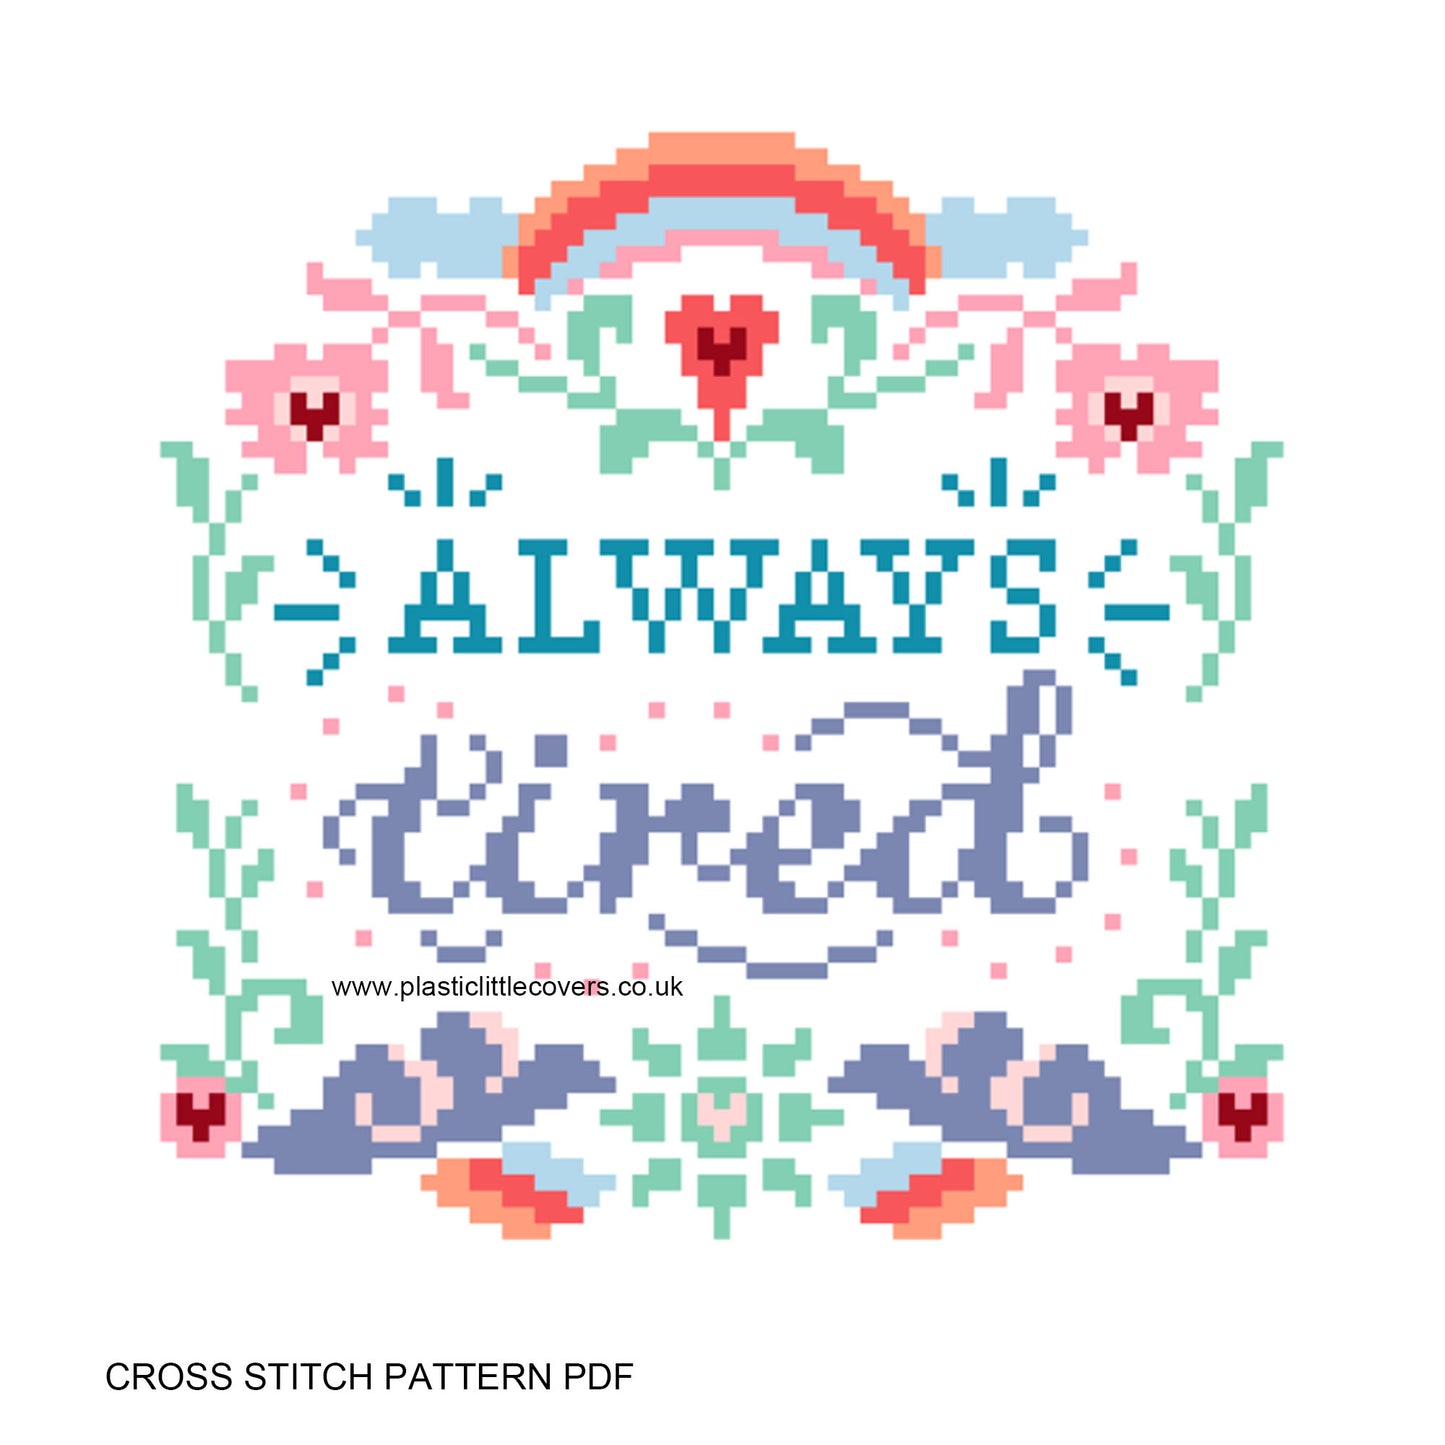 Always Tired - Cross Stitch Pattern PDF.